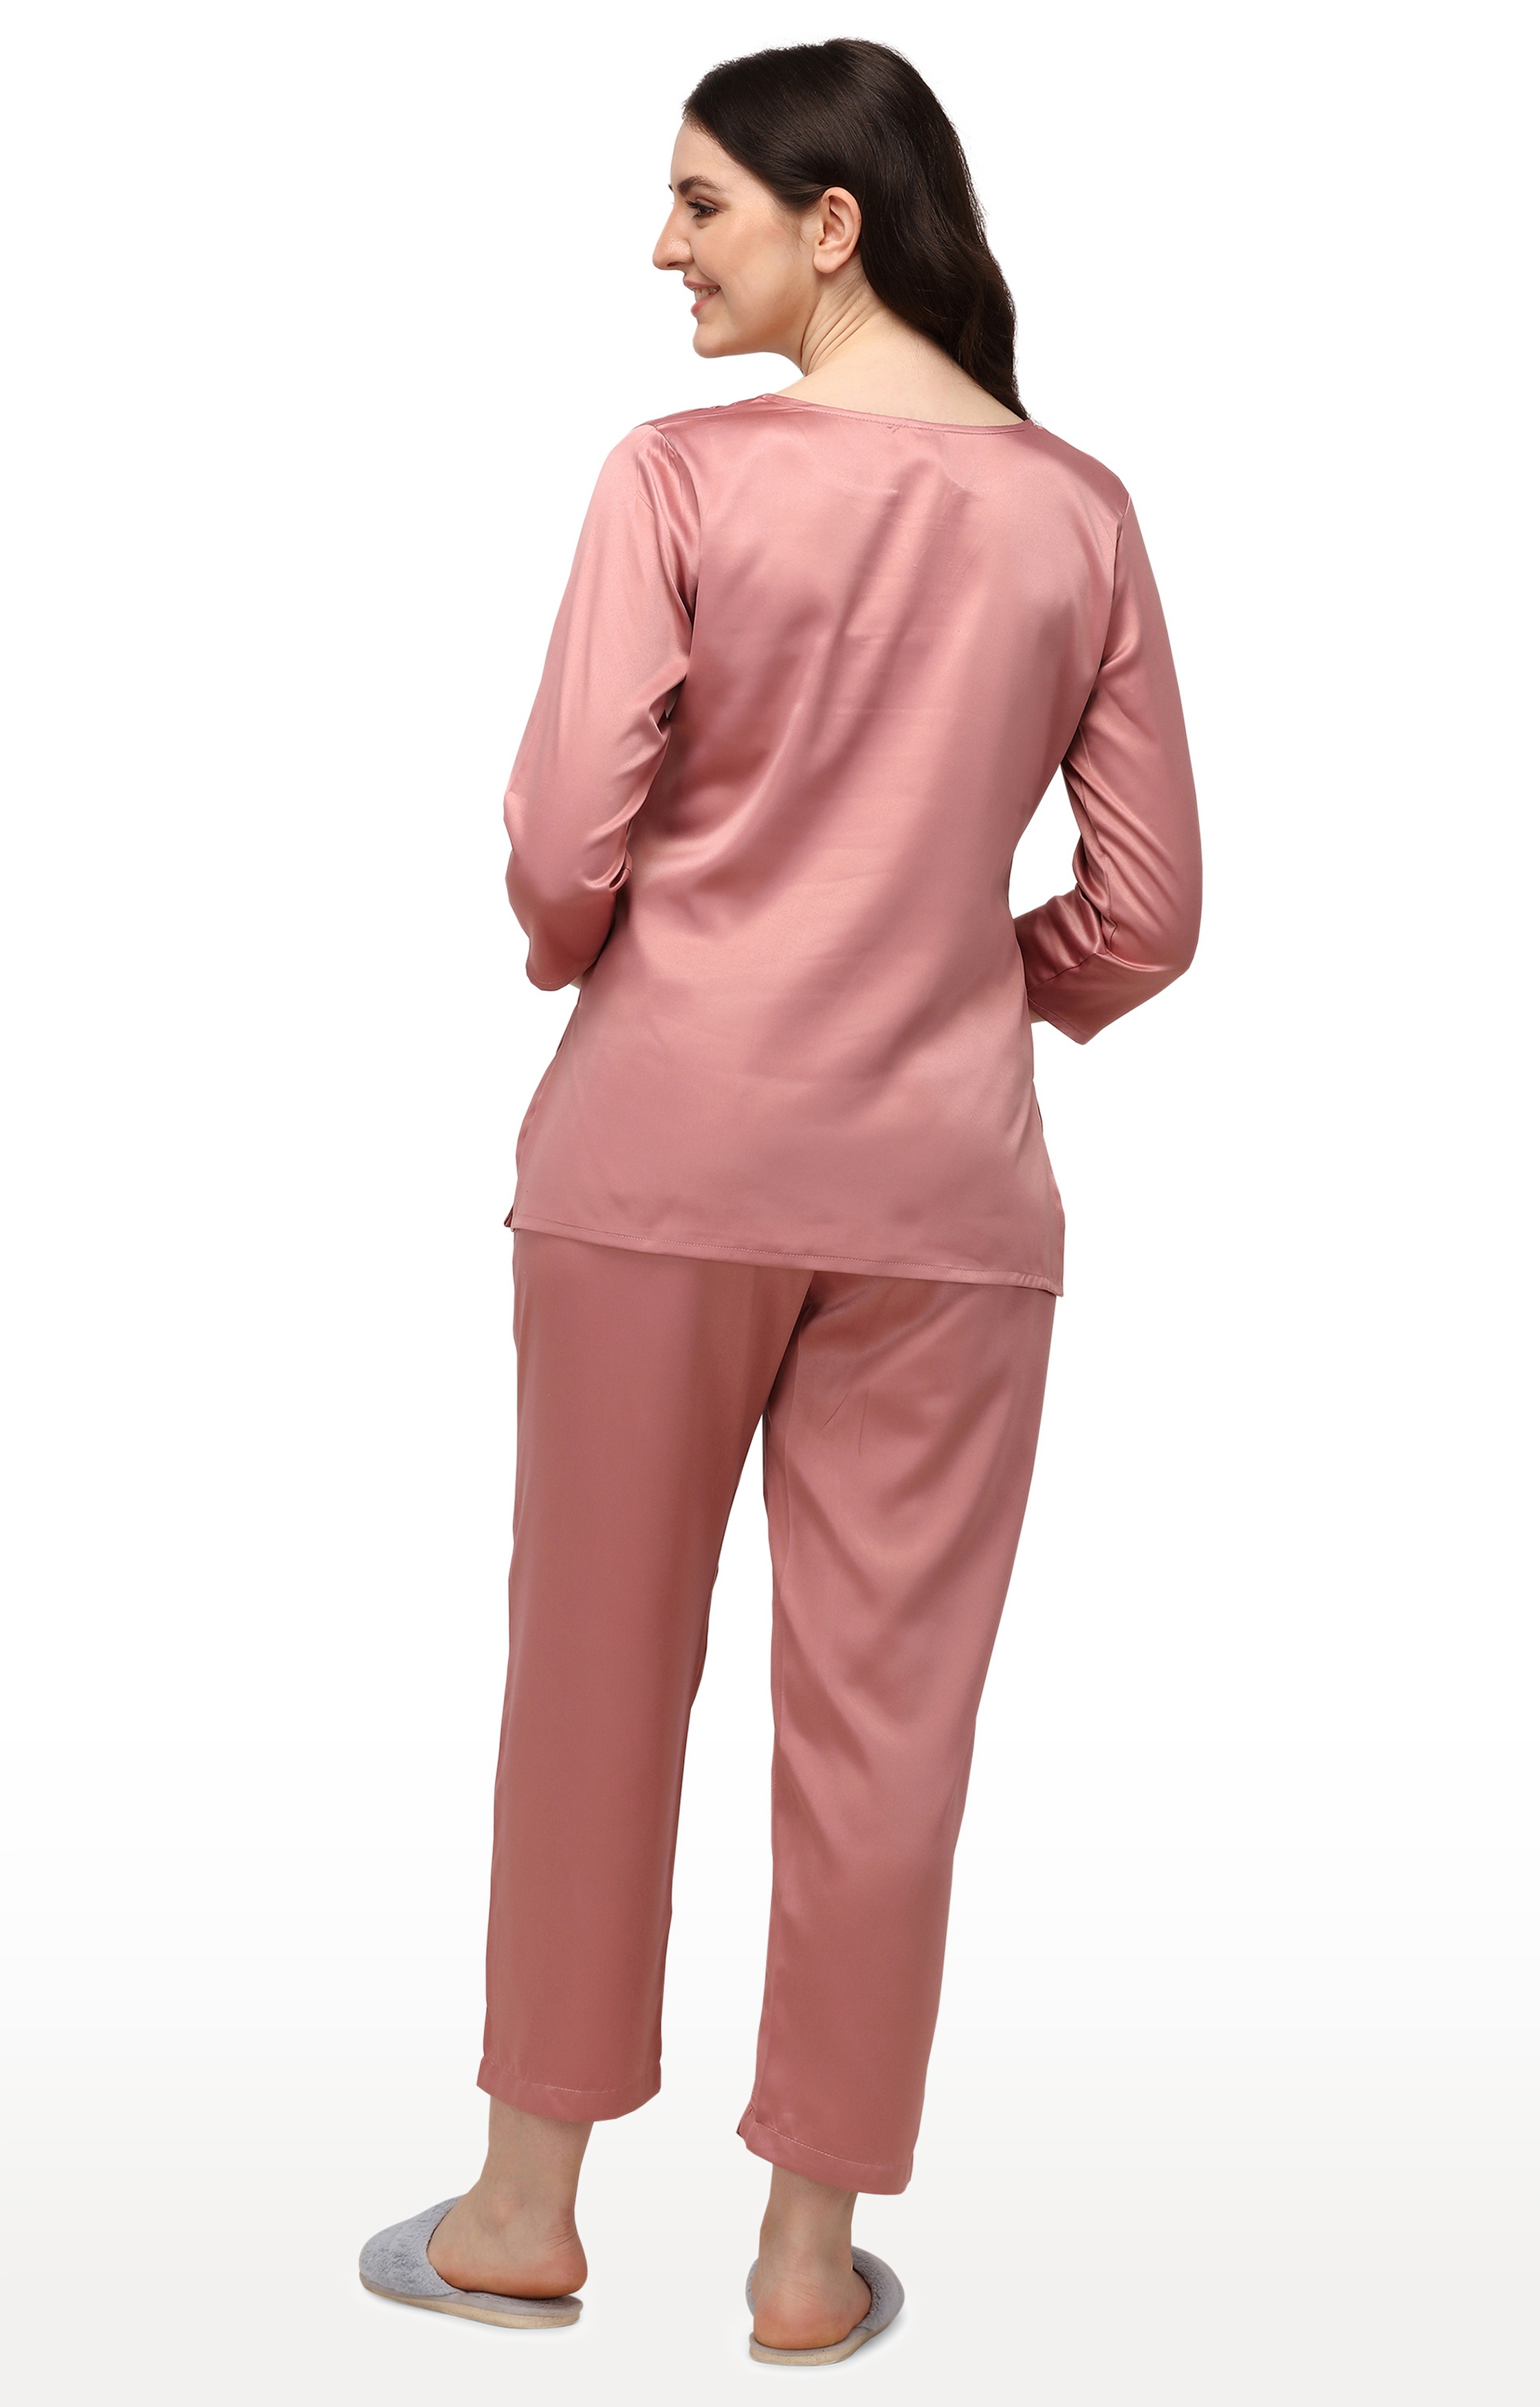 Smarty Pants Women's Silk Satin Shoulder Collar Rose Gold Color